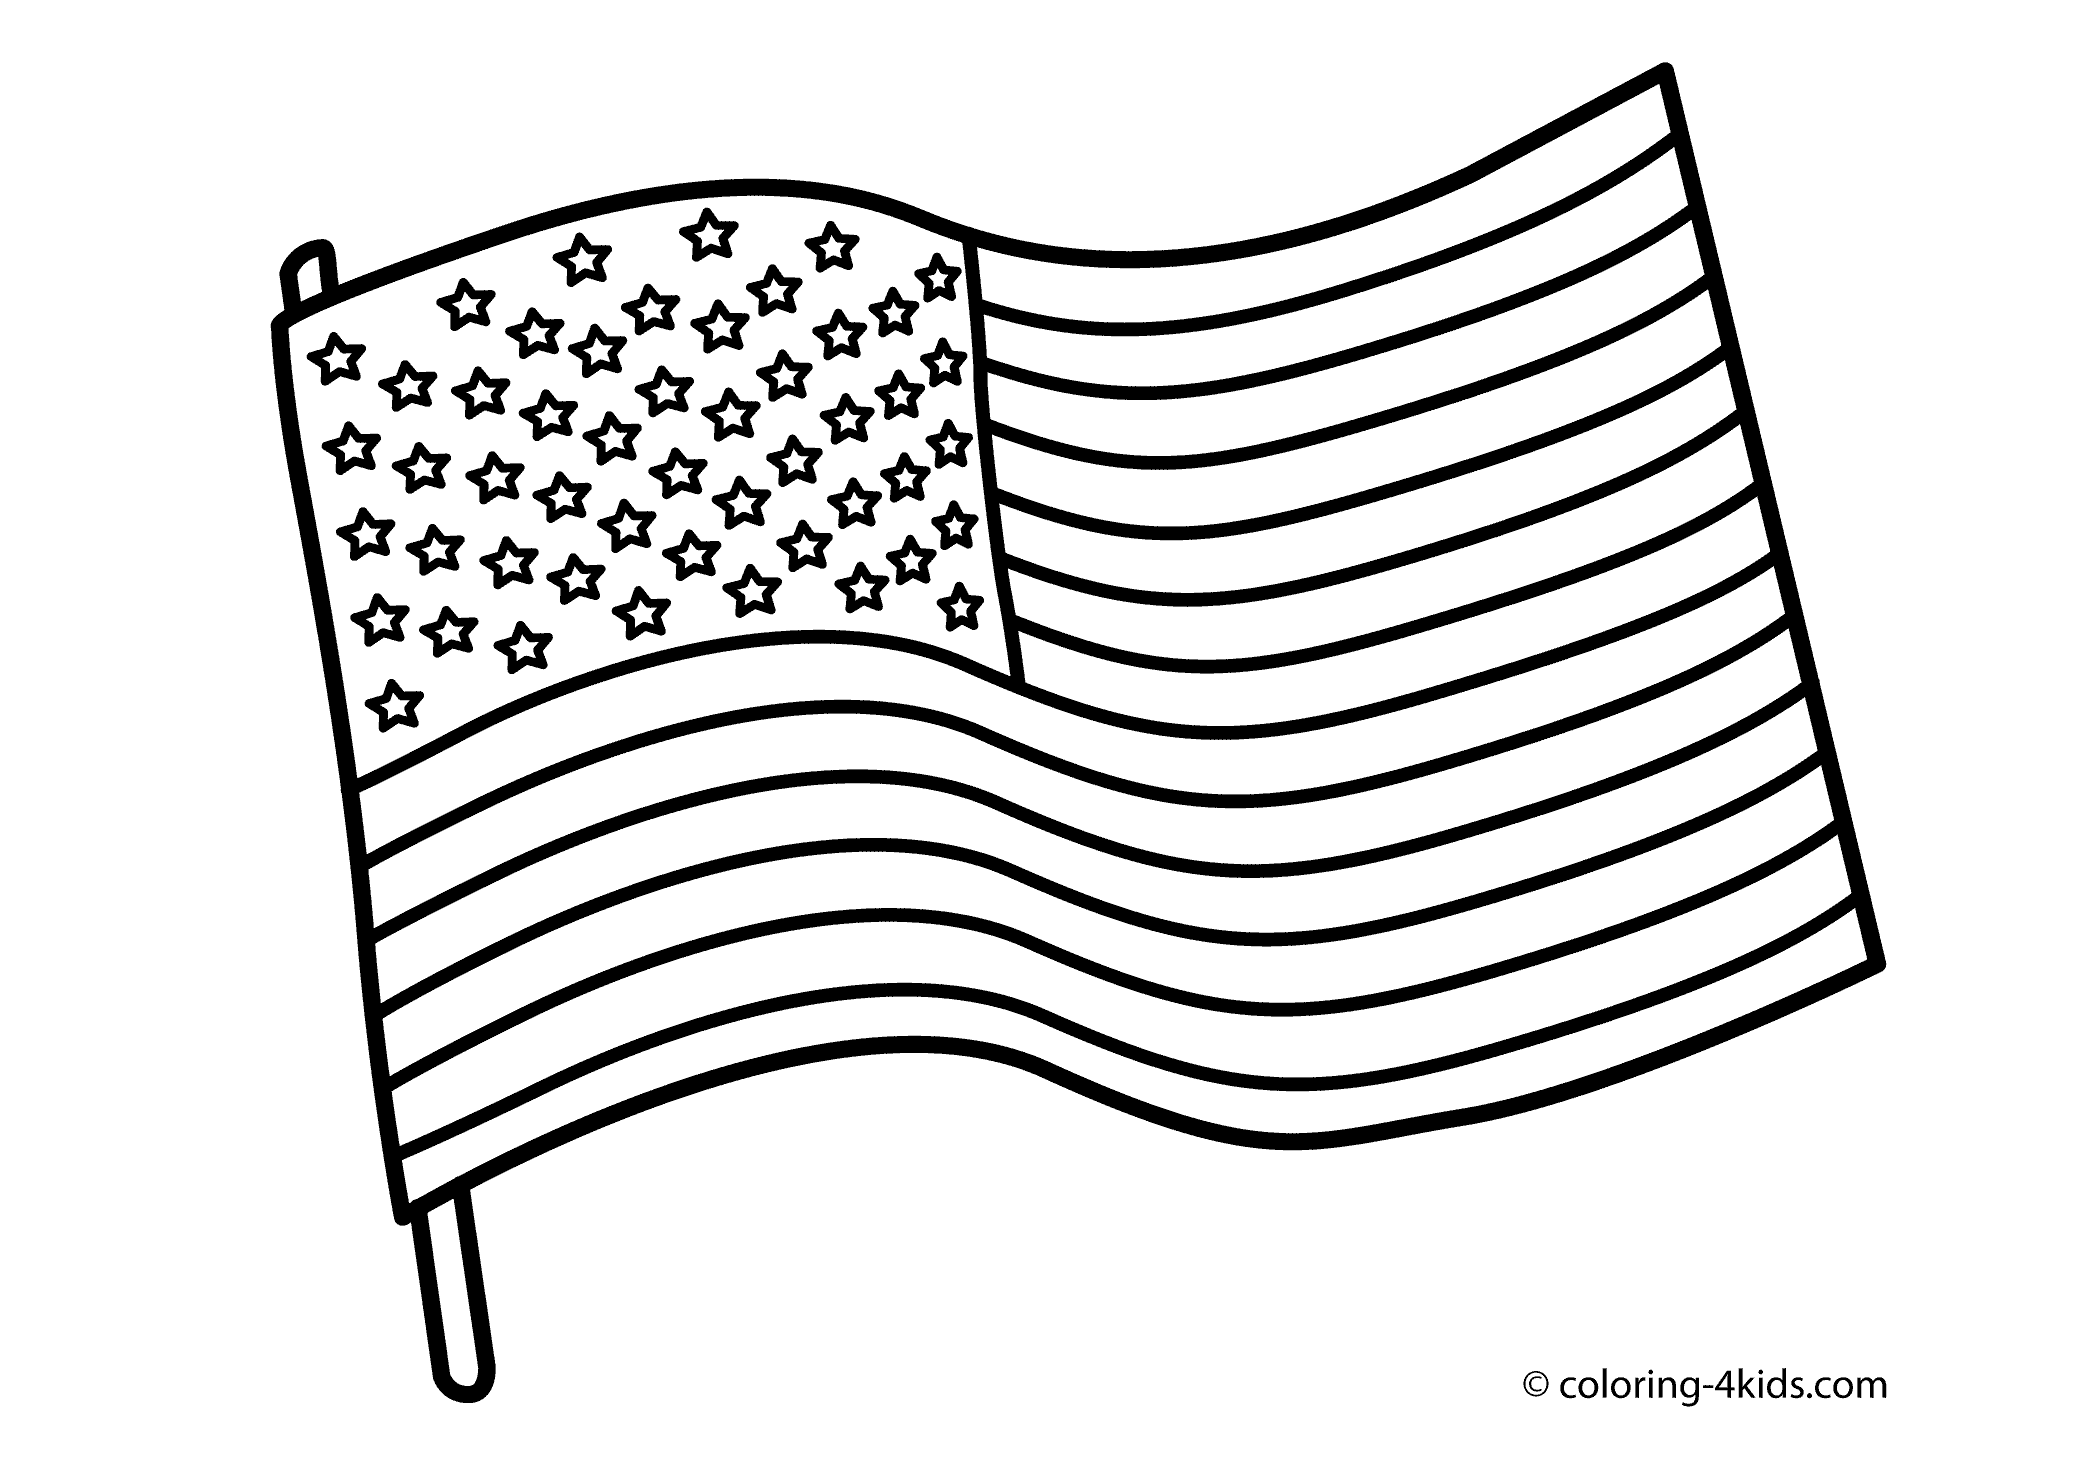 Image #20019 - Coloriage drapeau gratuit